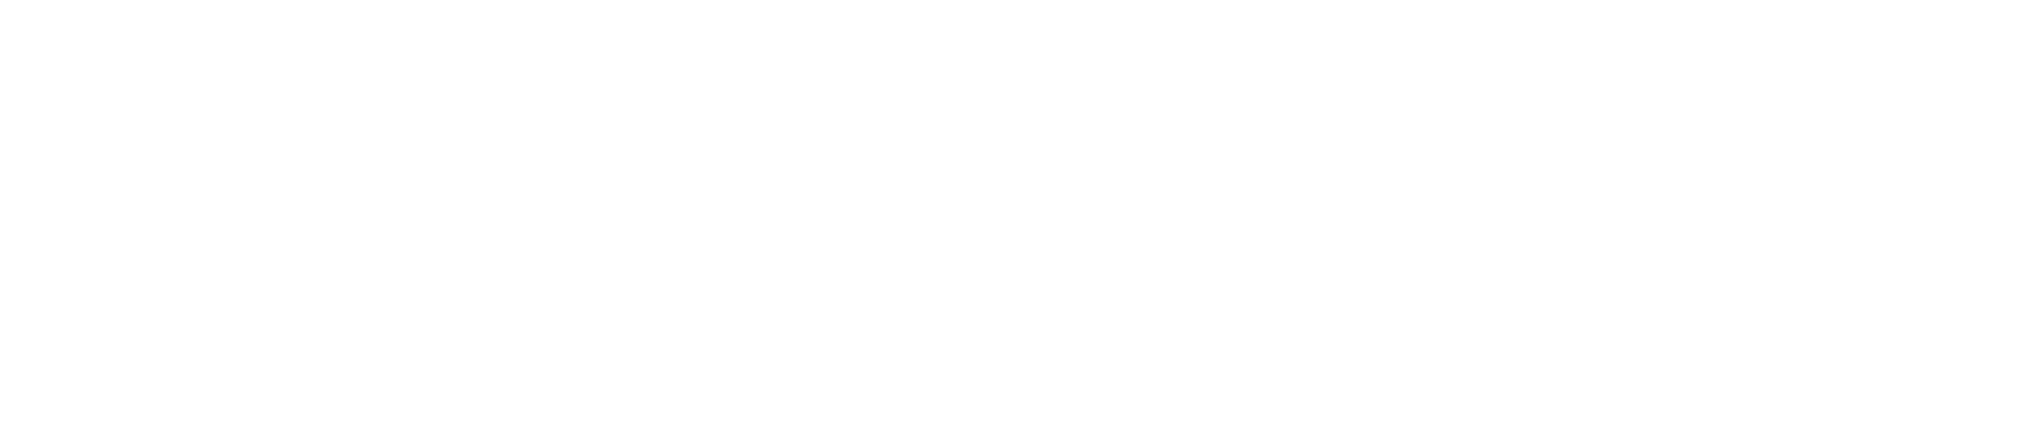 Suojax-logo